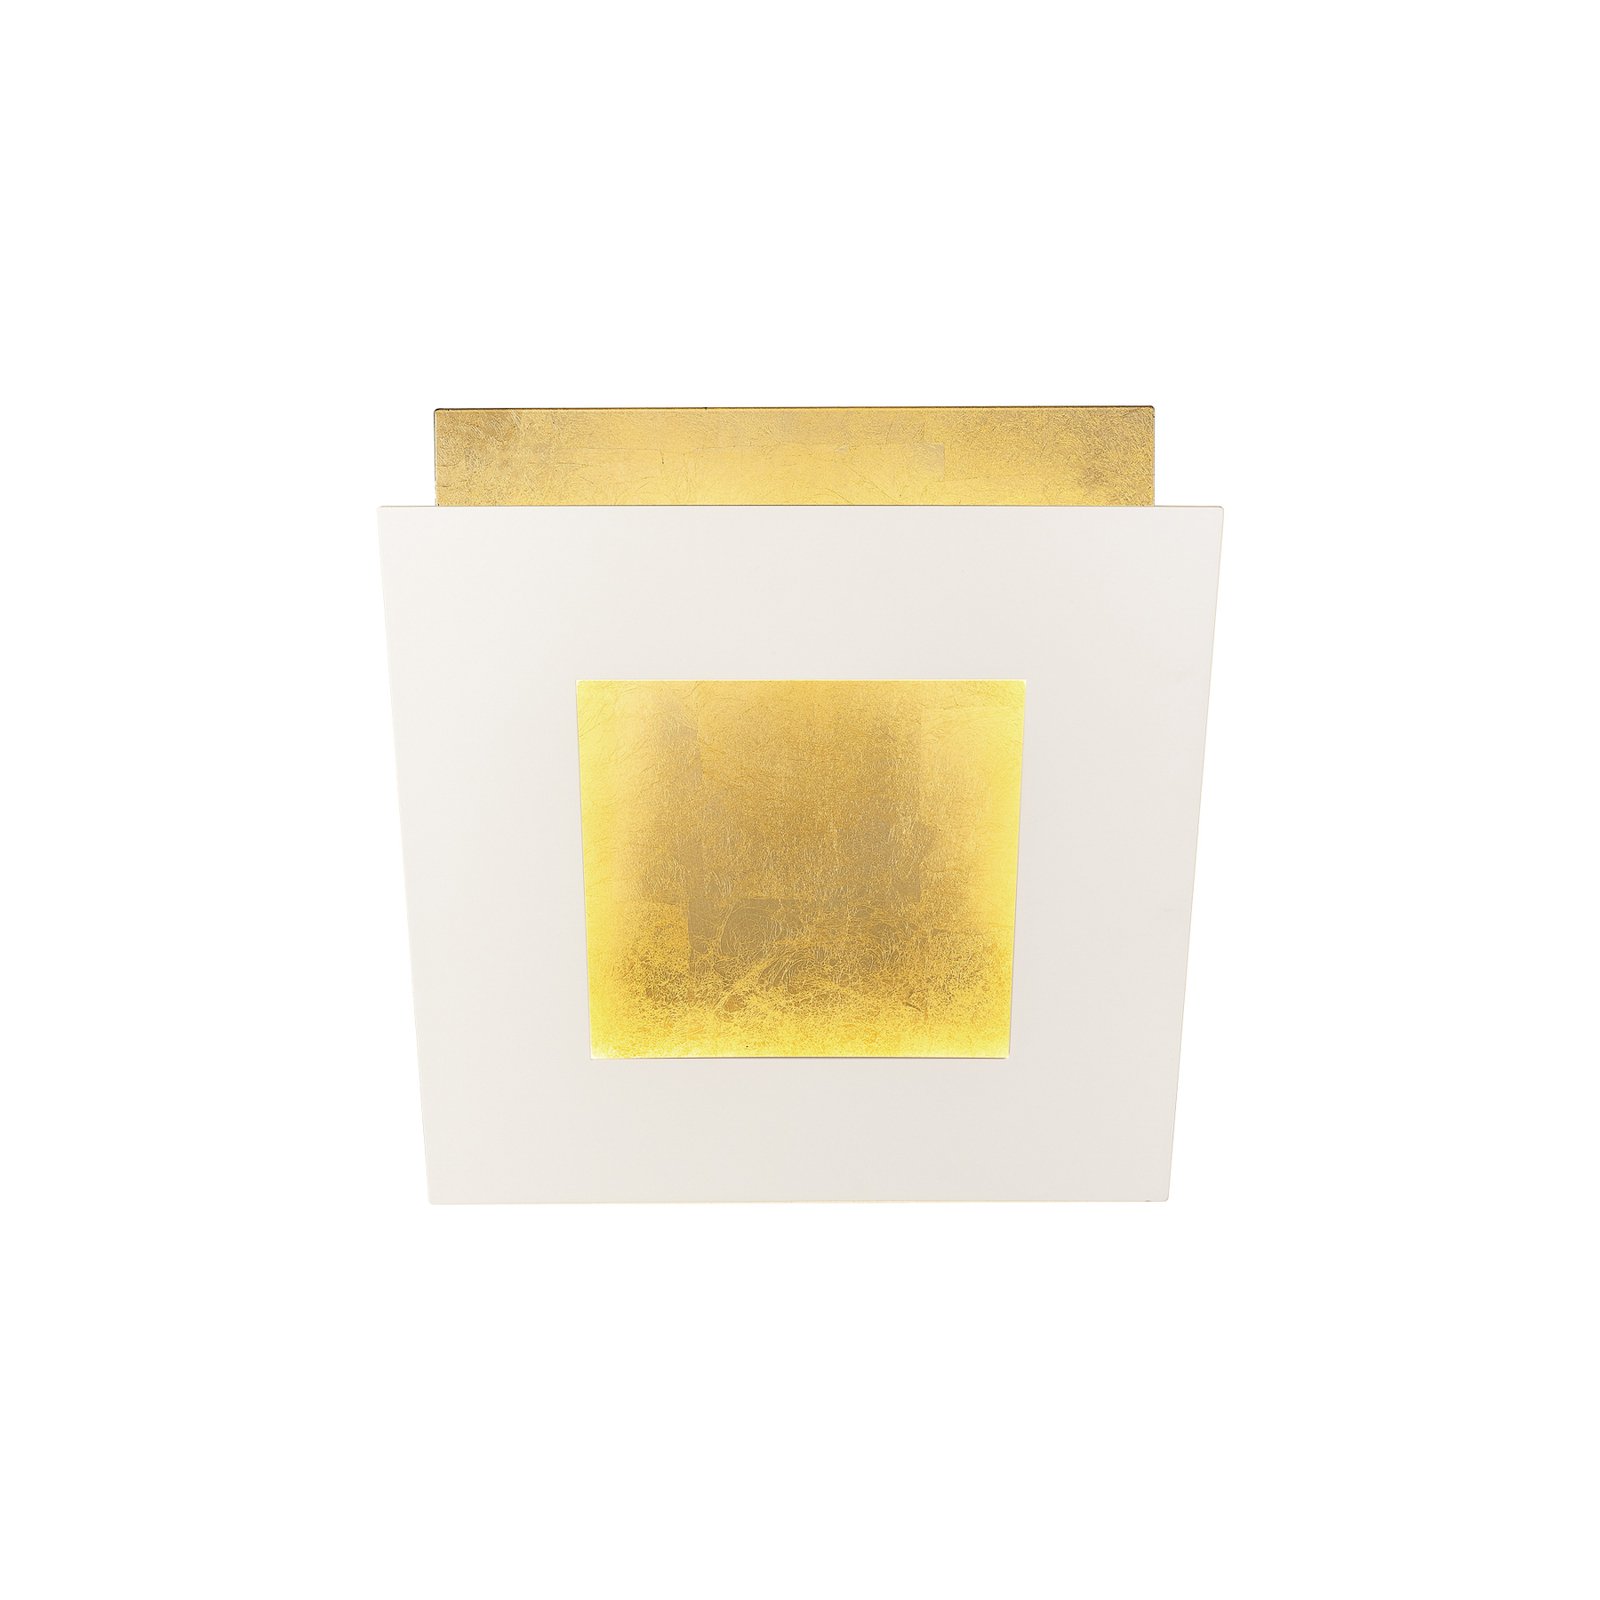 LED wandlamp Dalia, wit/goud, 18 x 18 cm, aluminium